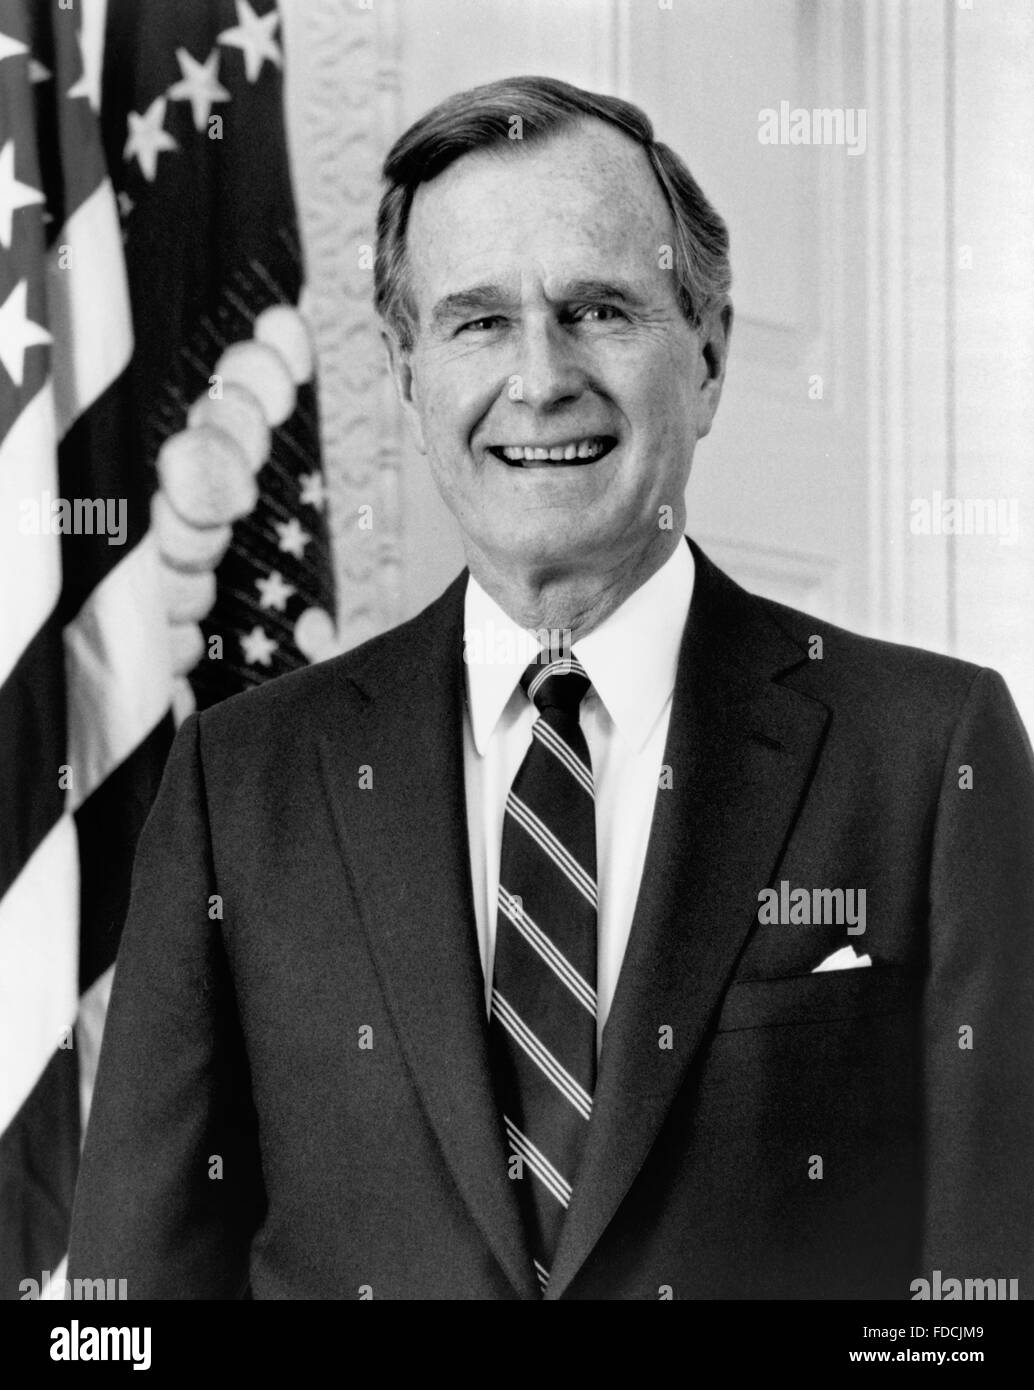 George H W Bush. Portrait of President George H W Bush, c.1989 Stock Photo